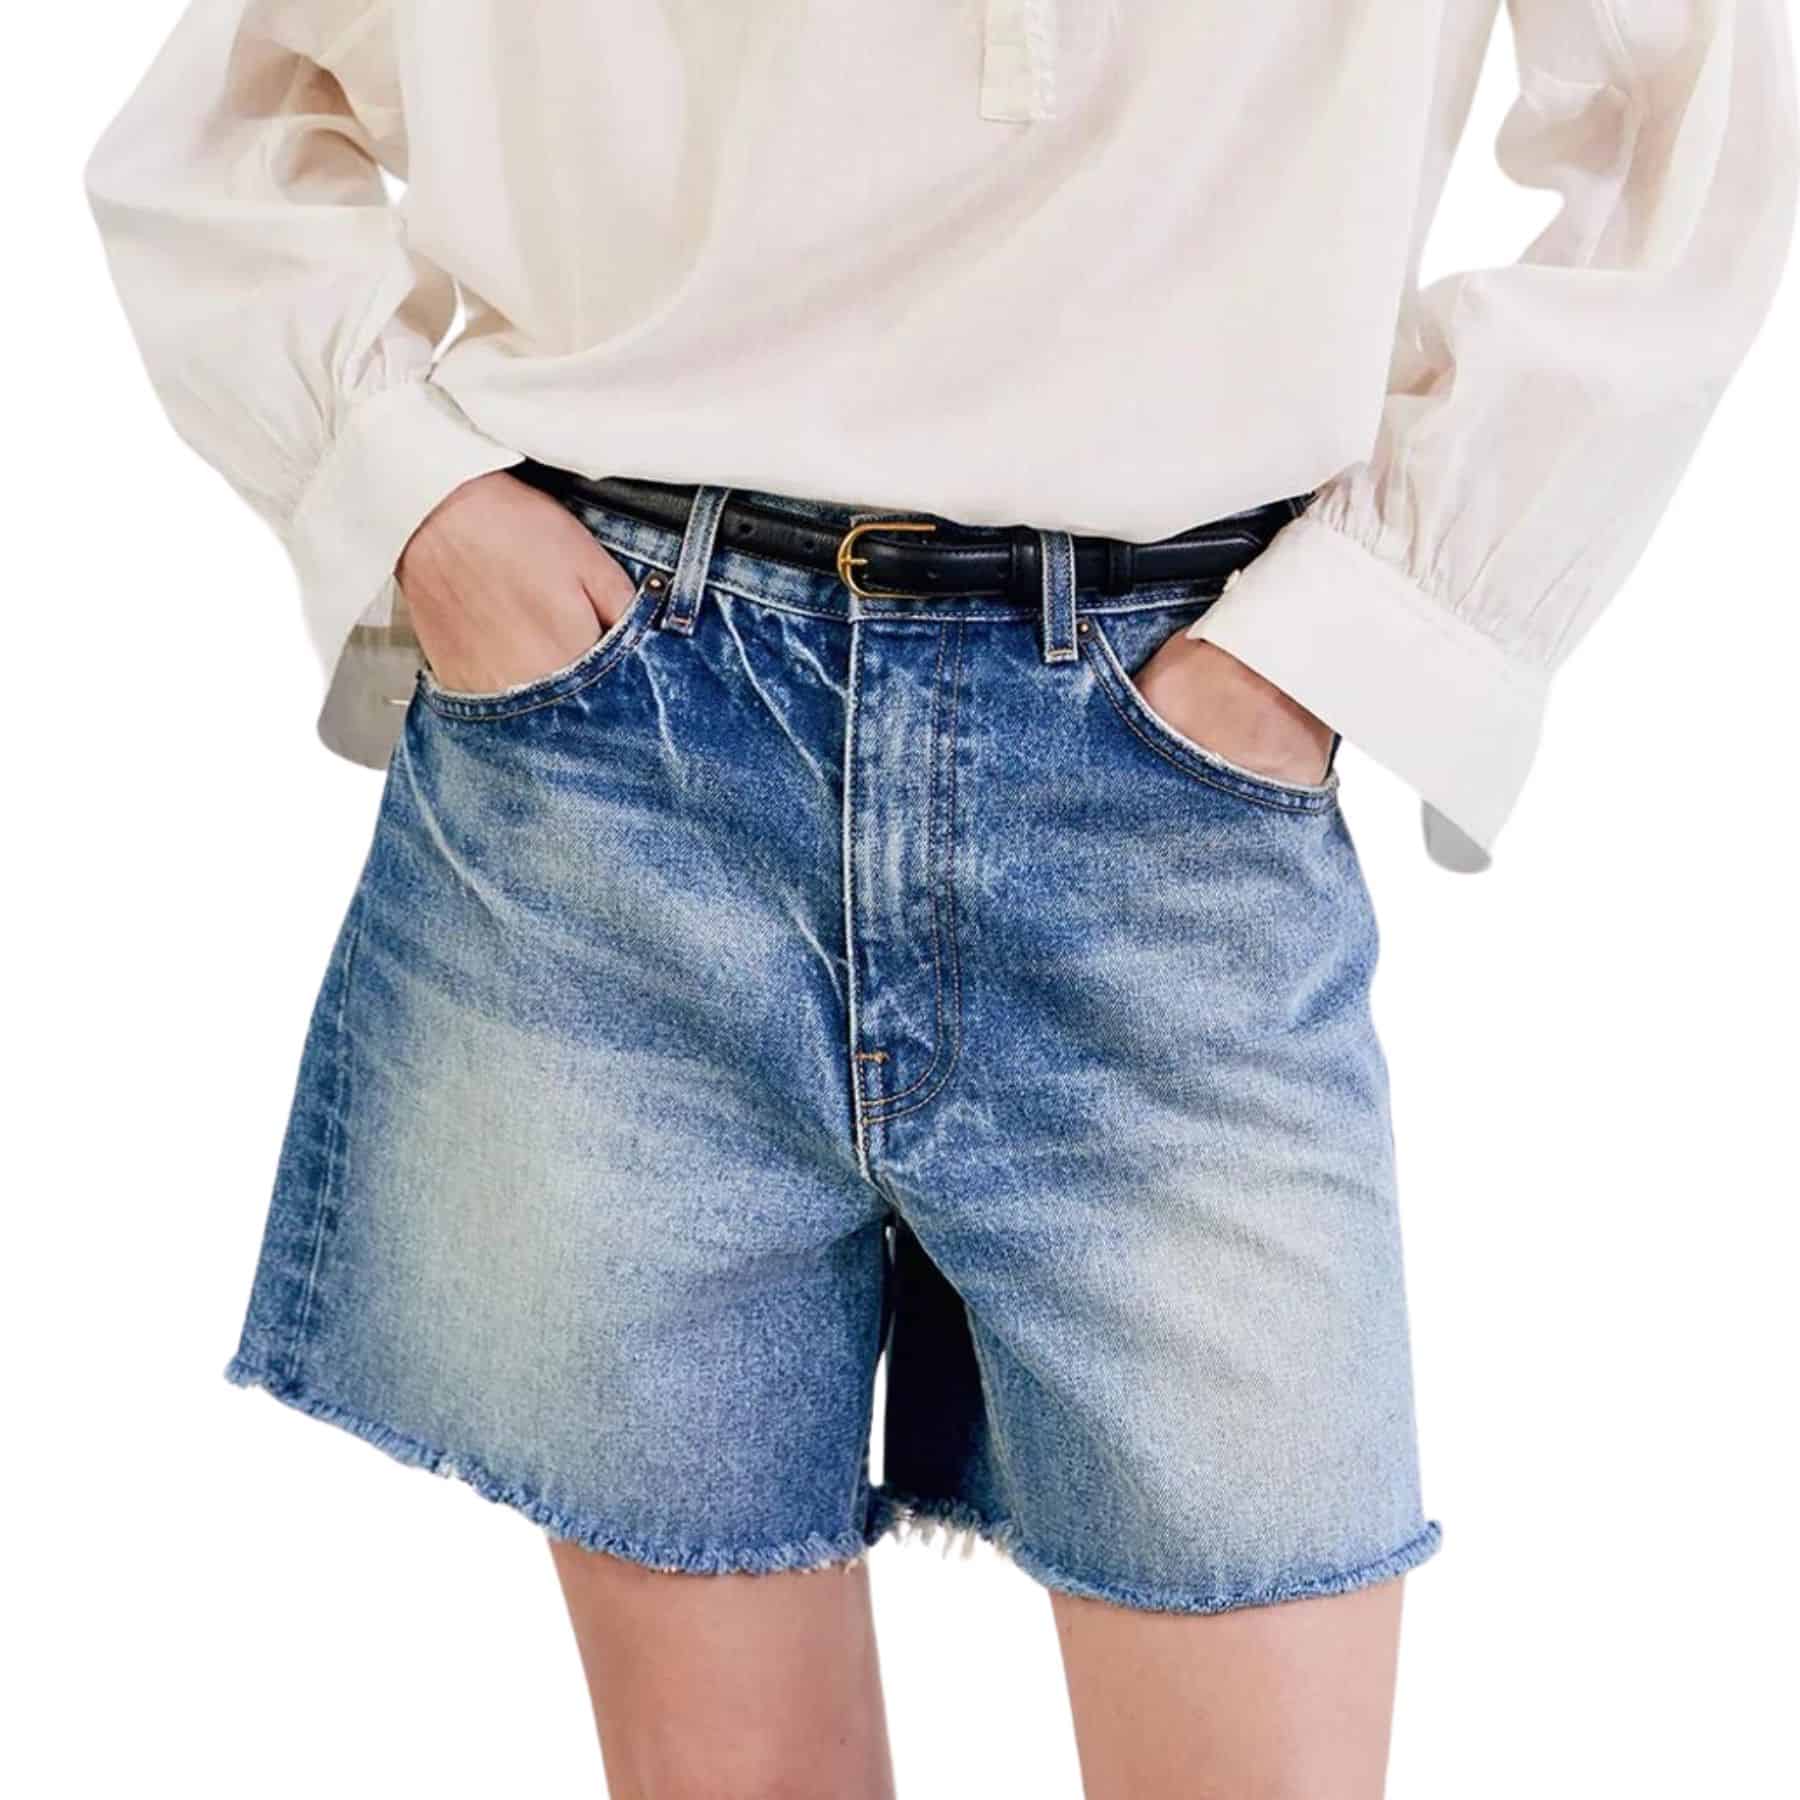 Women's Shorts: Shop Jeans Shorts, Bermuda Shorts & More